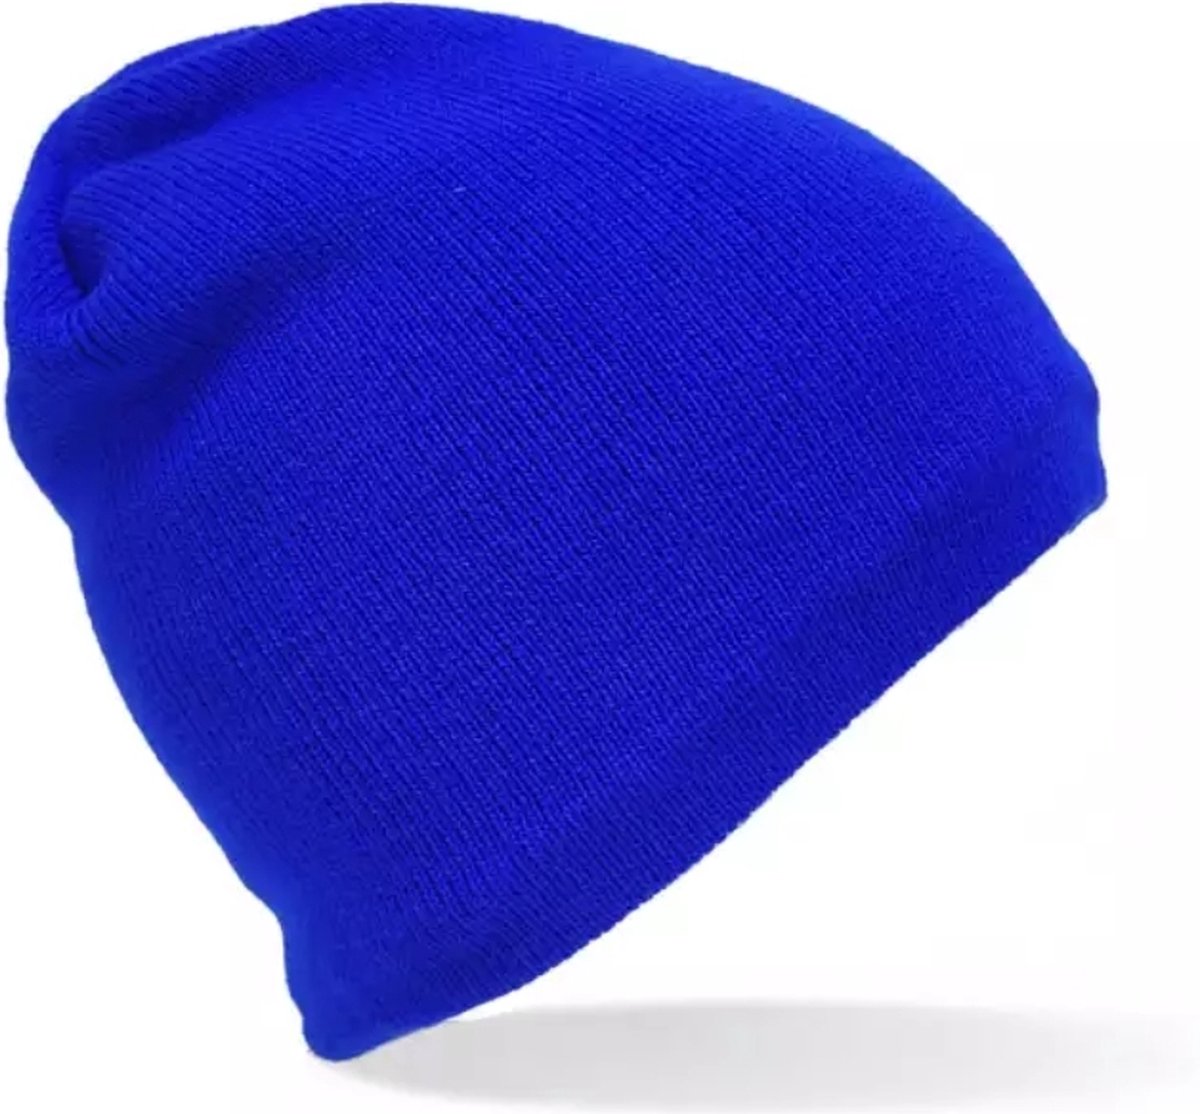 Beanie Blauw - One Size - Gebreid / Knit - Muts Heren - Muts Dames - Beanie Basic - Mutsen - Warme Muts Herfst en Winter - Wintersport